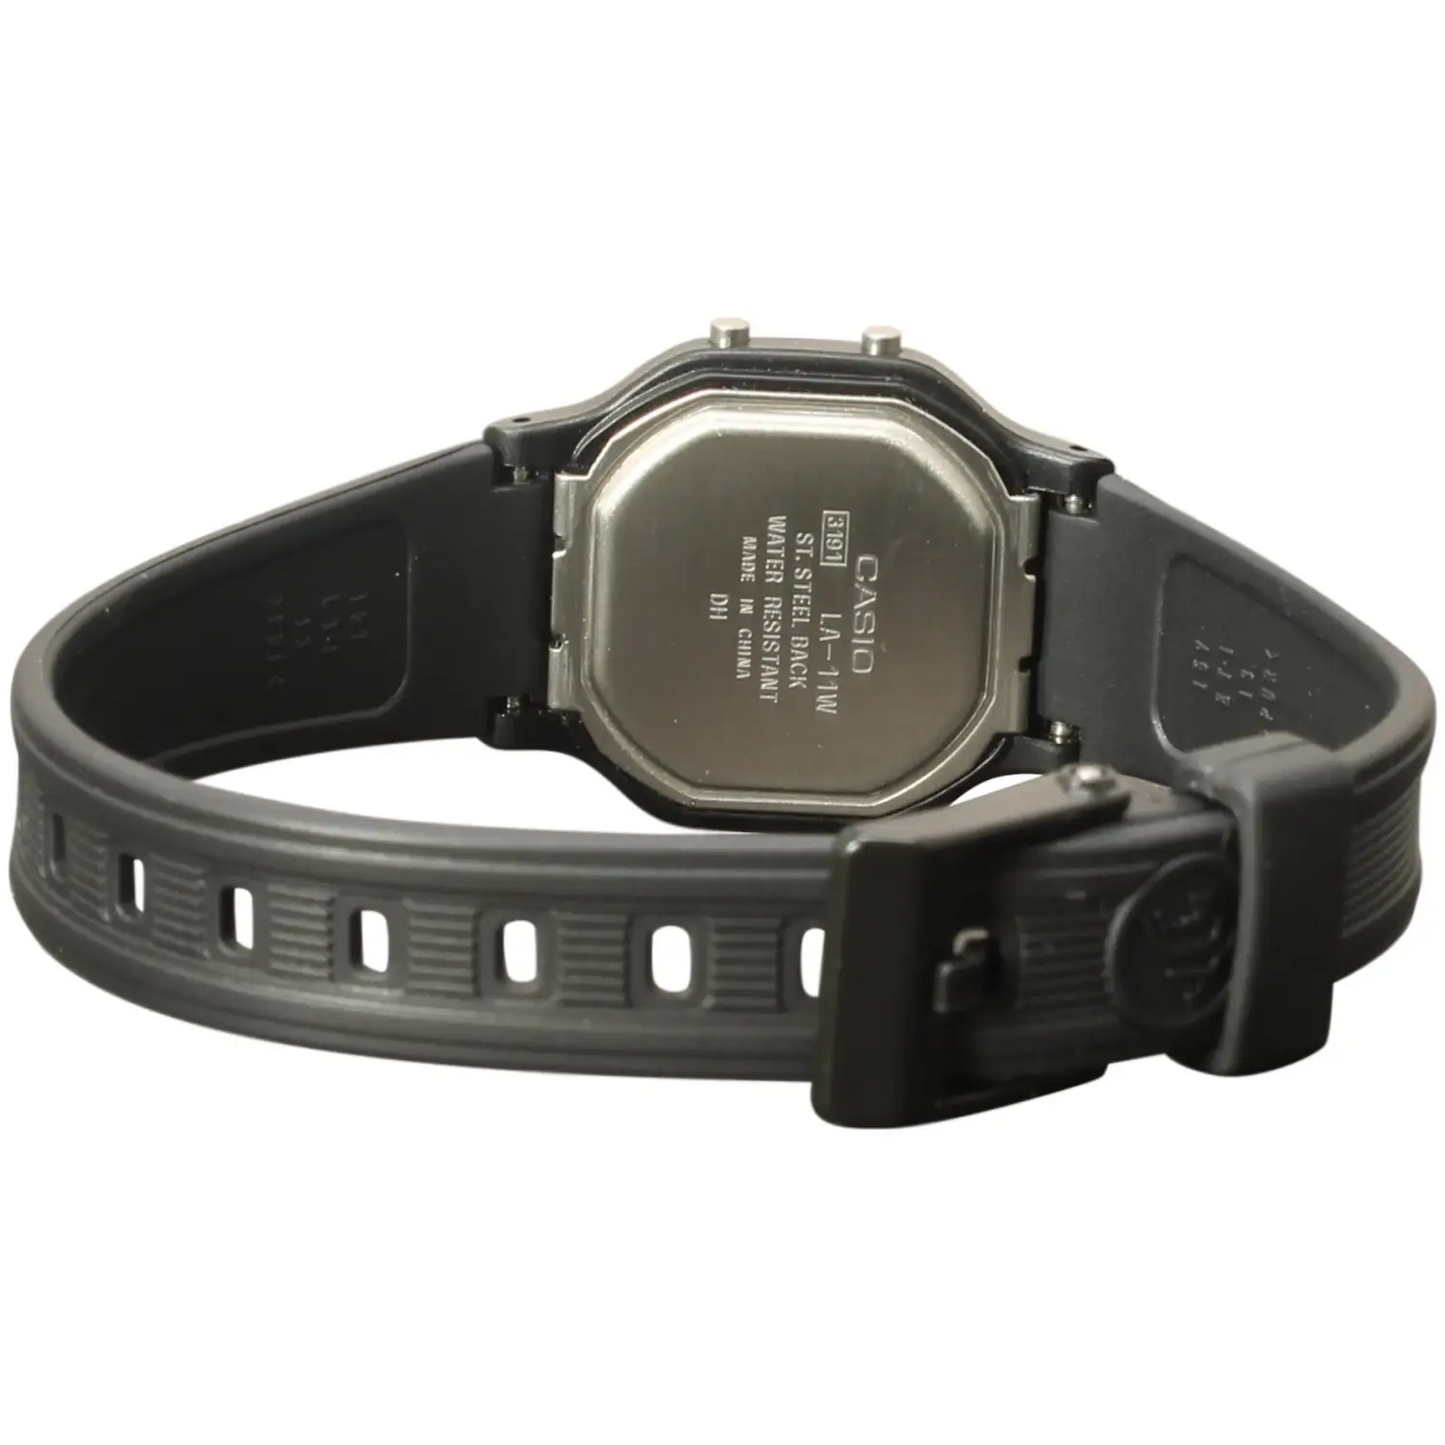 Casio Women’s Black Casual Digital Watch LA11WB-4D - Watches